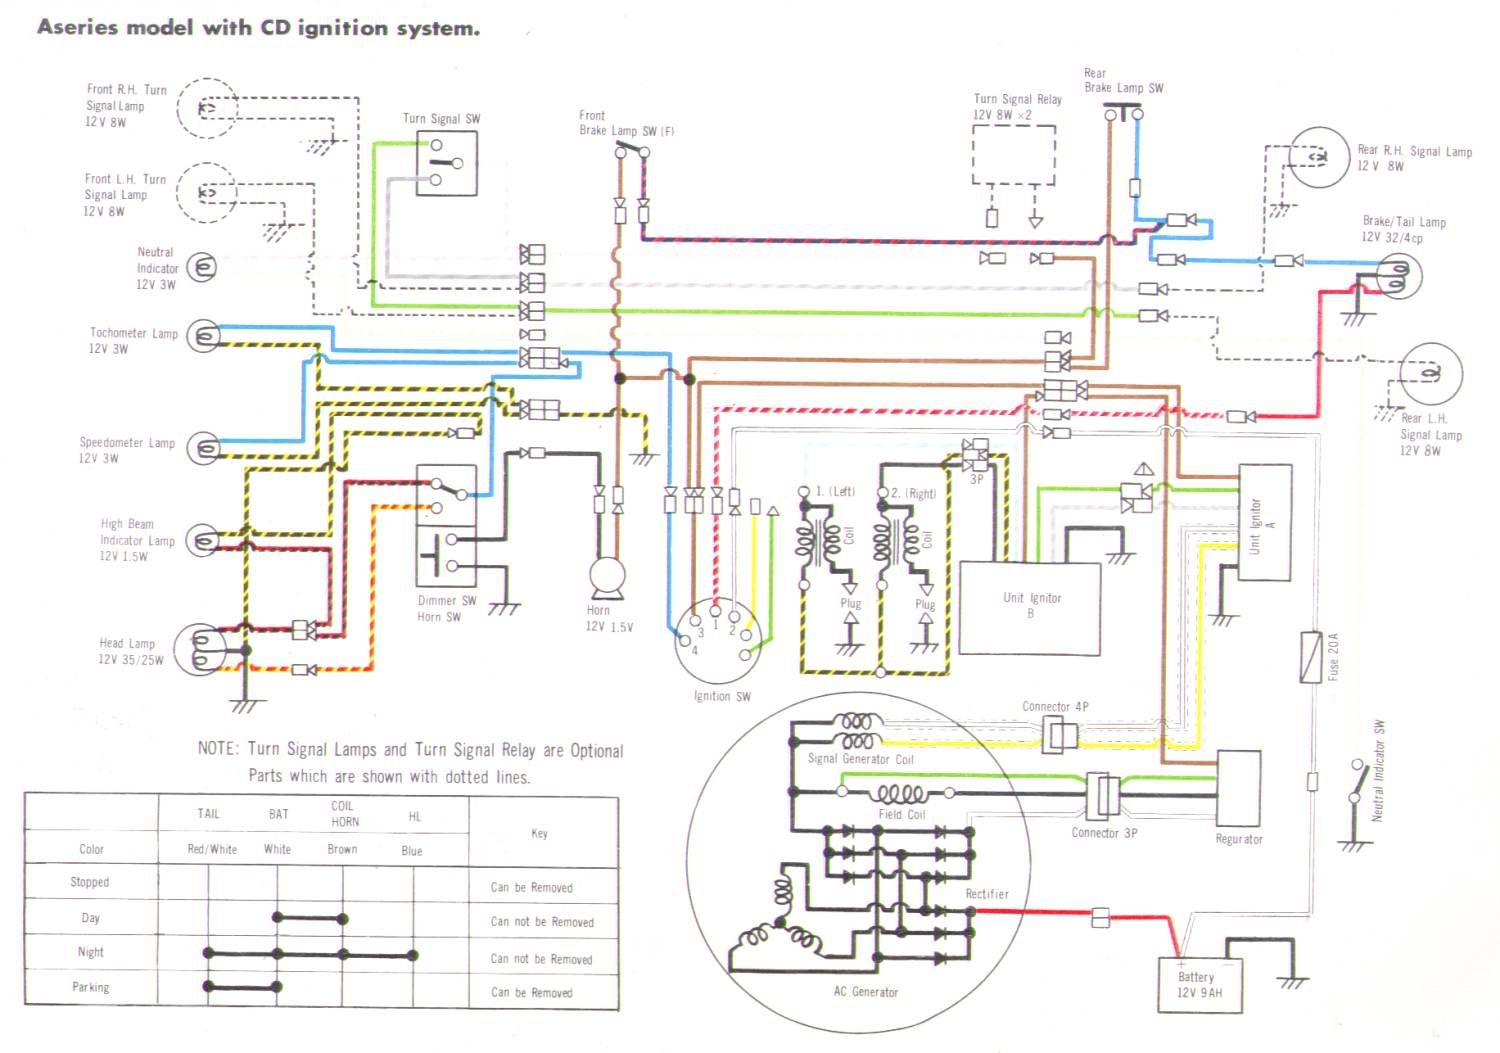 Wiring Diagrams H2a  A7 W   Cdi  U0026 A7 W  Points